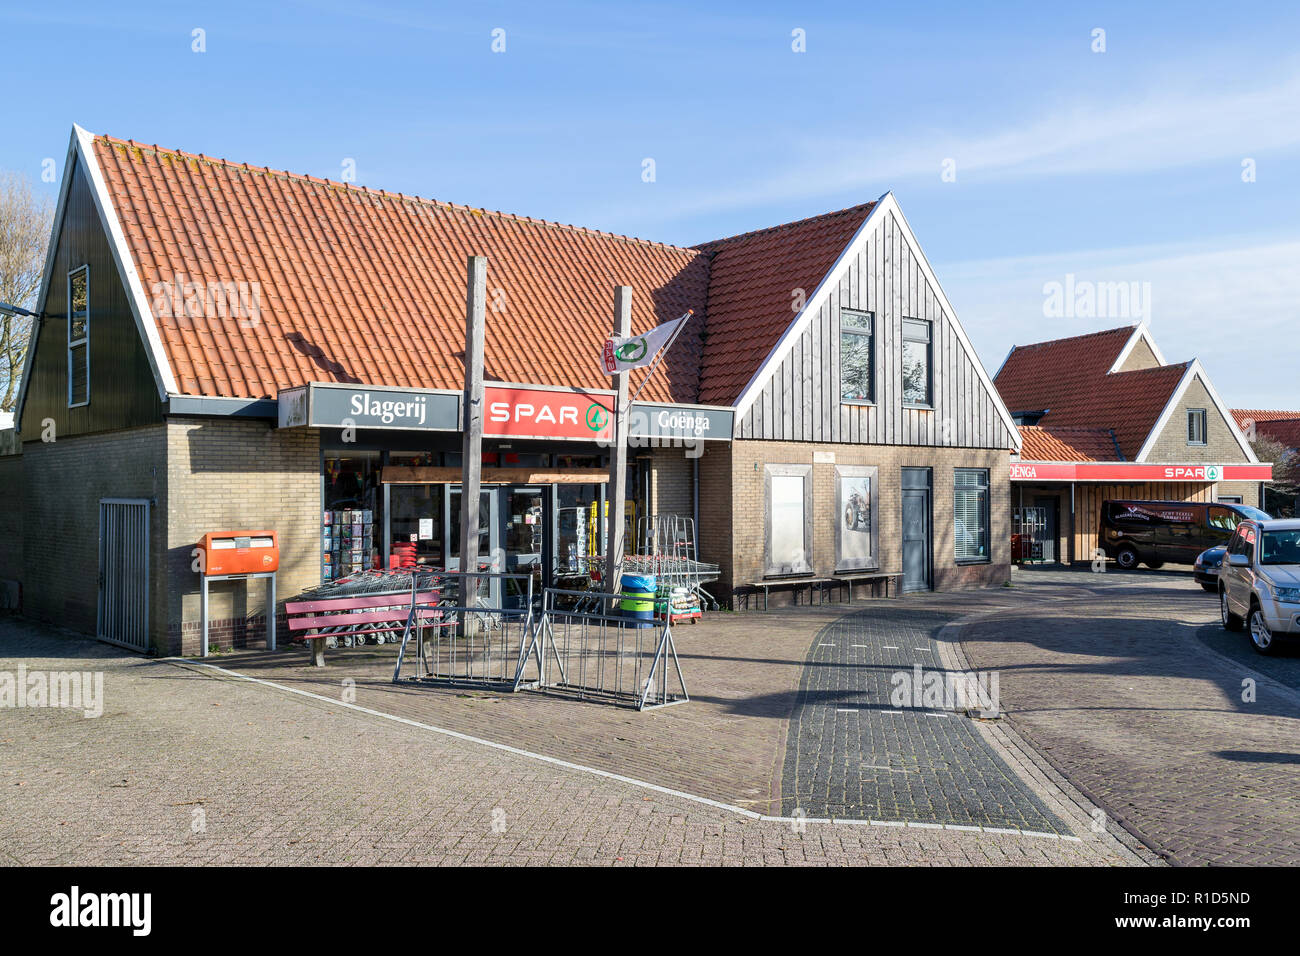 Spar supermarket in Den Hoorn, the Netherlands Stock Photo